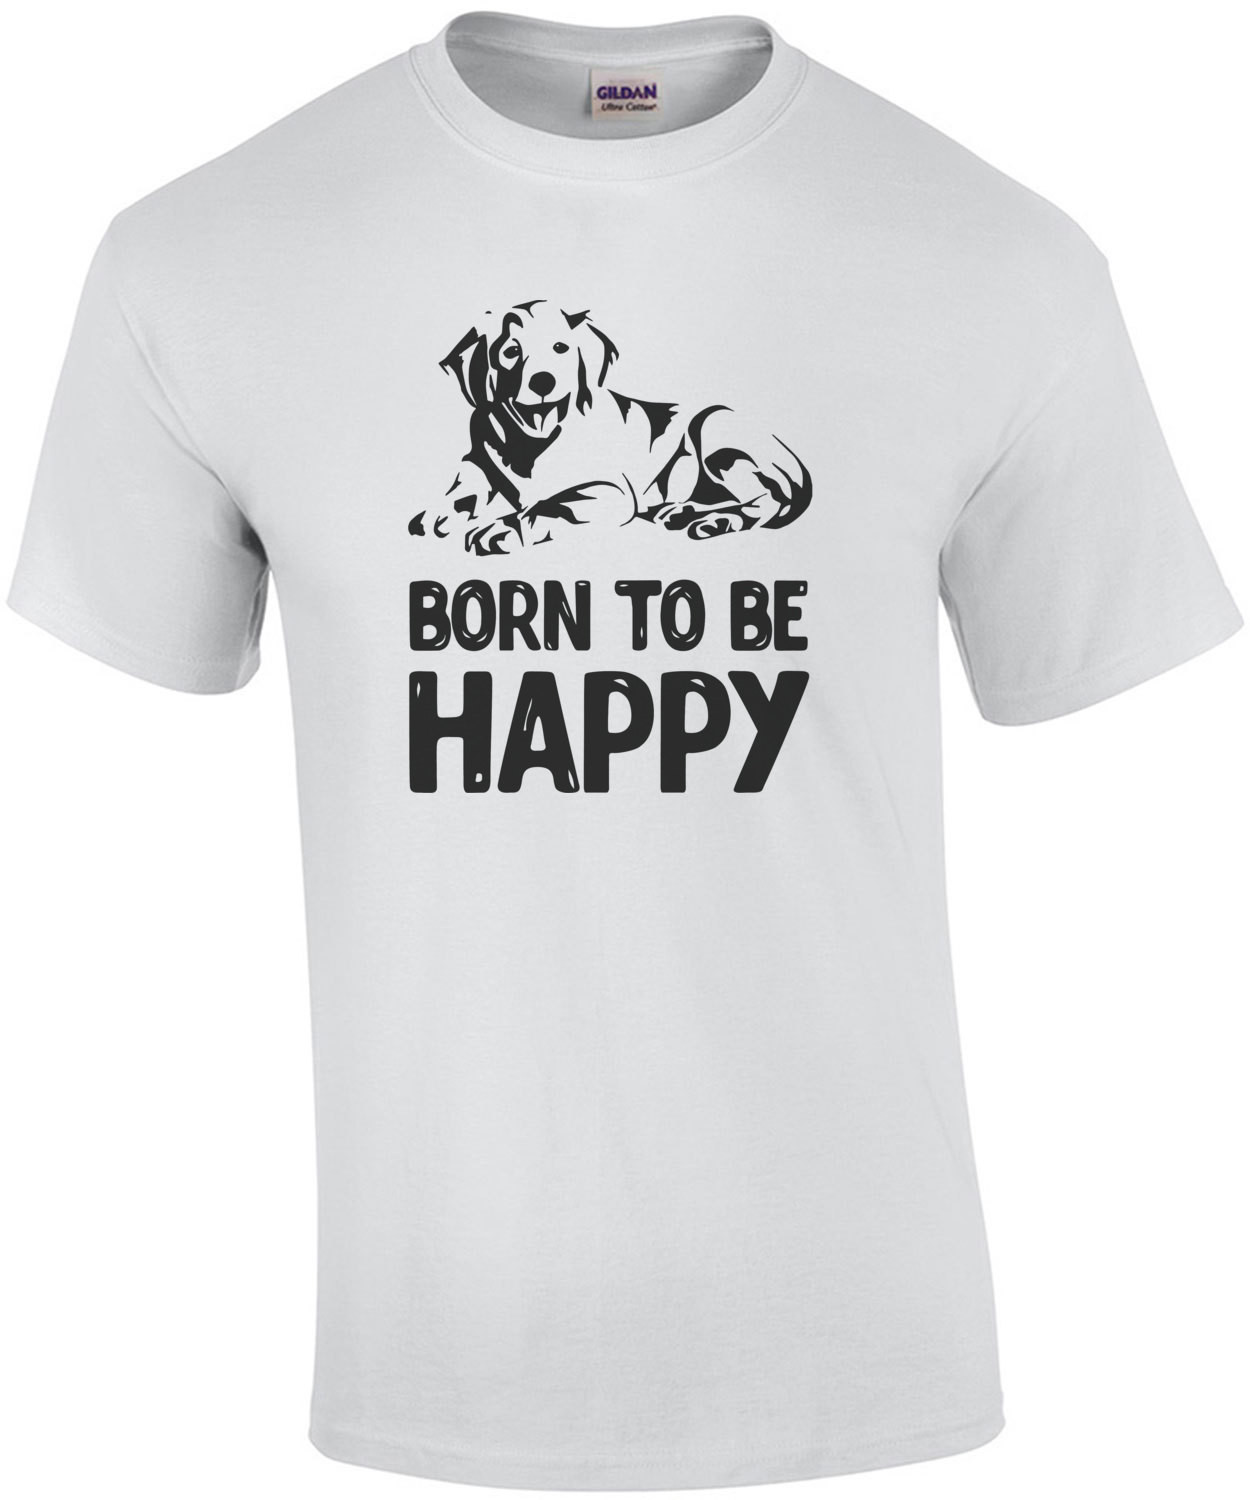 Born to be happy - Golden Retriever T-Shirt